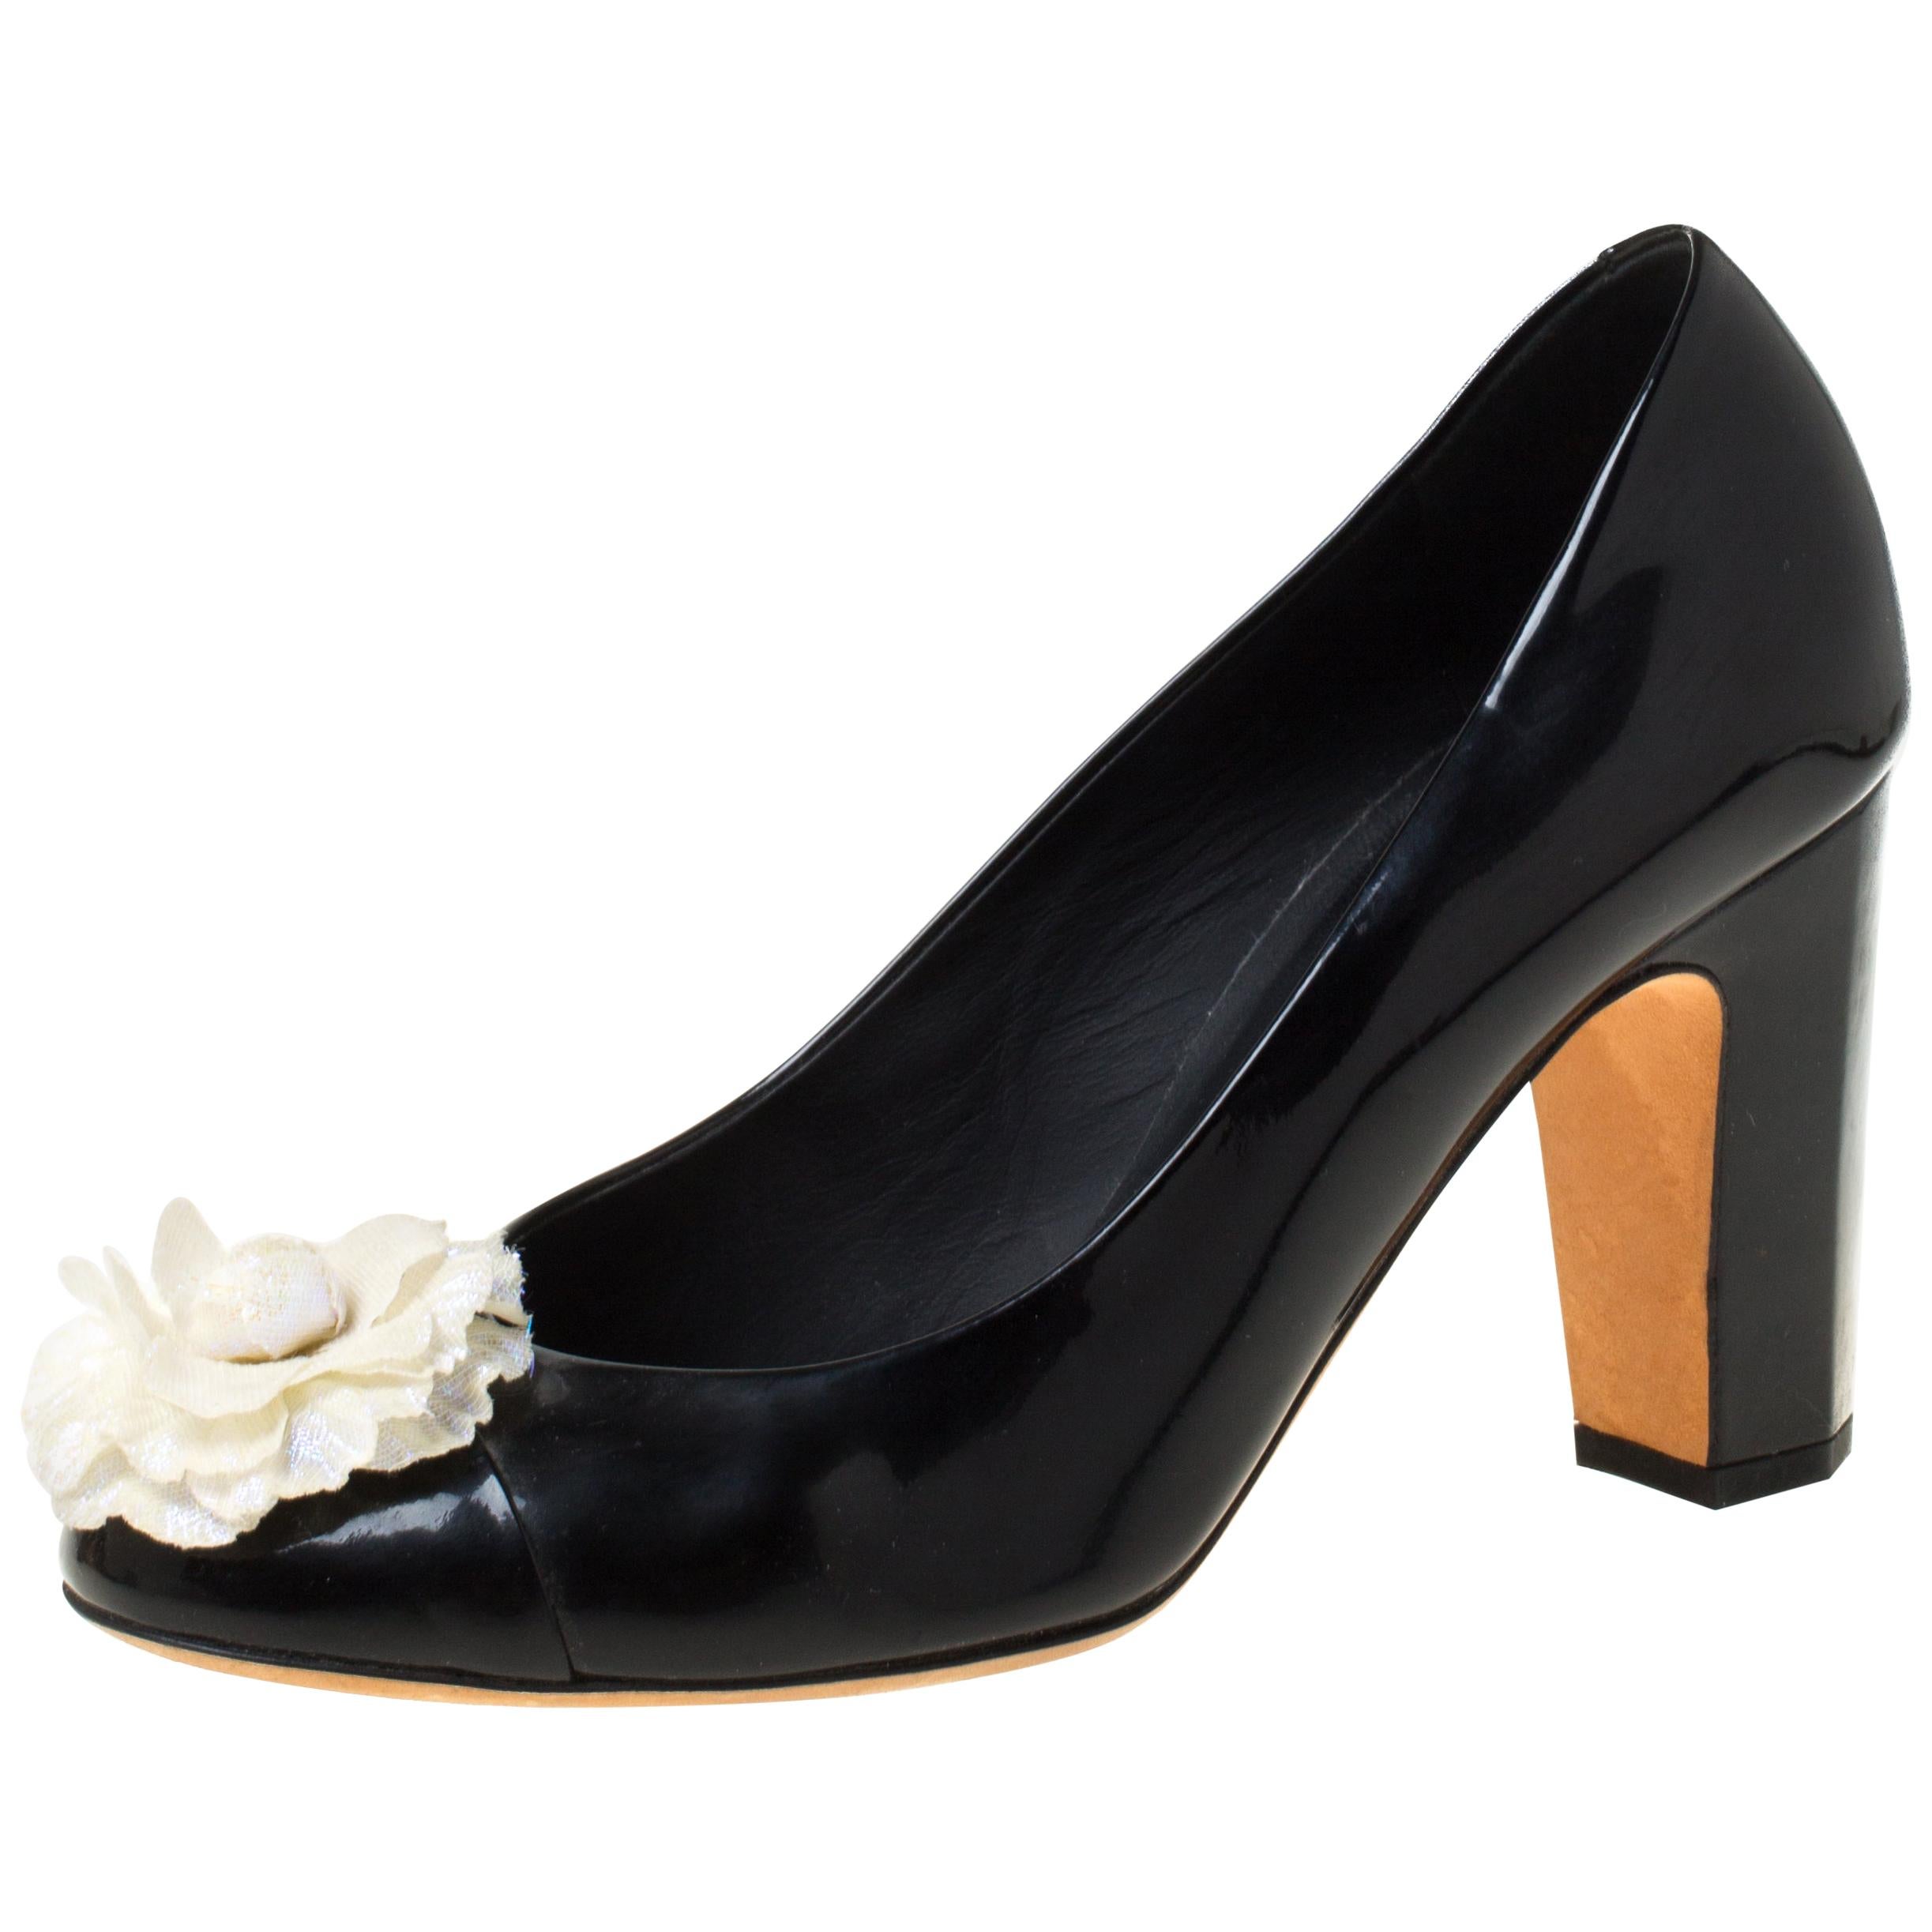 Chanel Black/White Leather Camellia Cap Toe Pumps Size 38